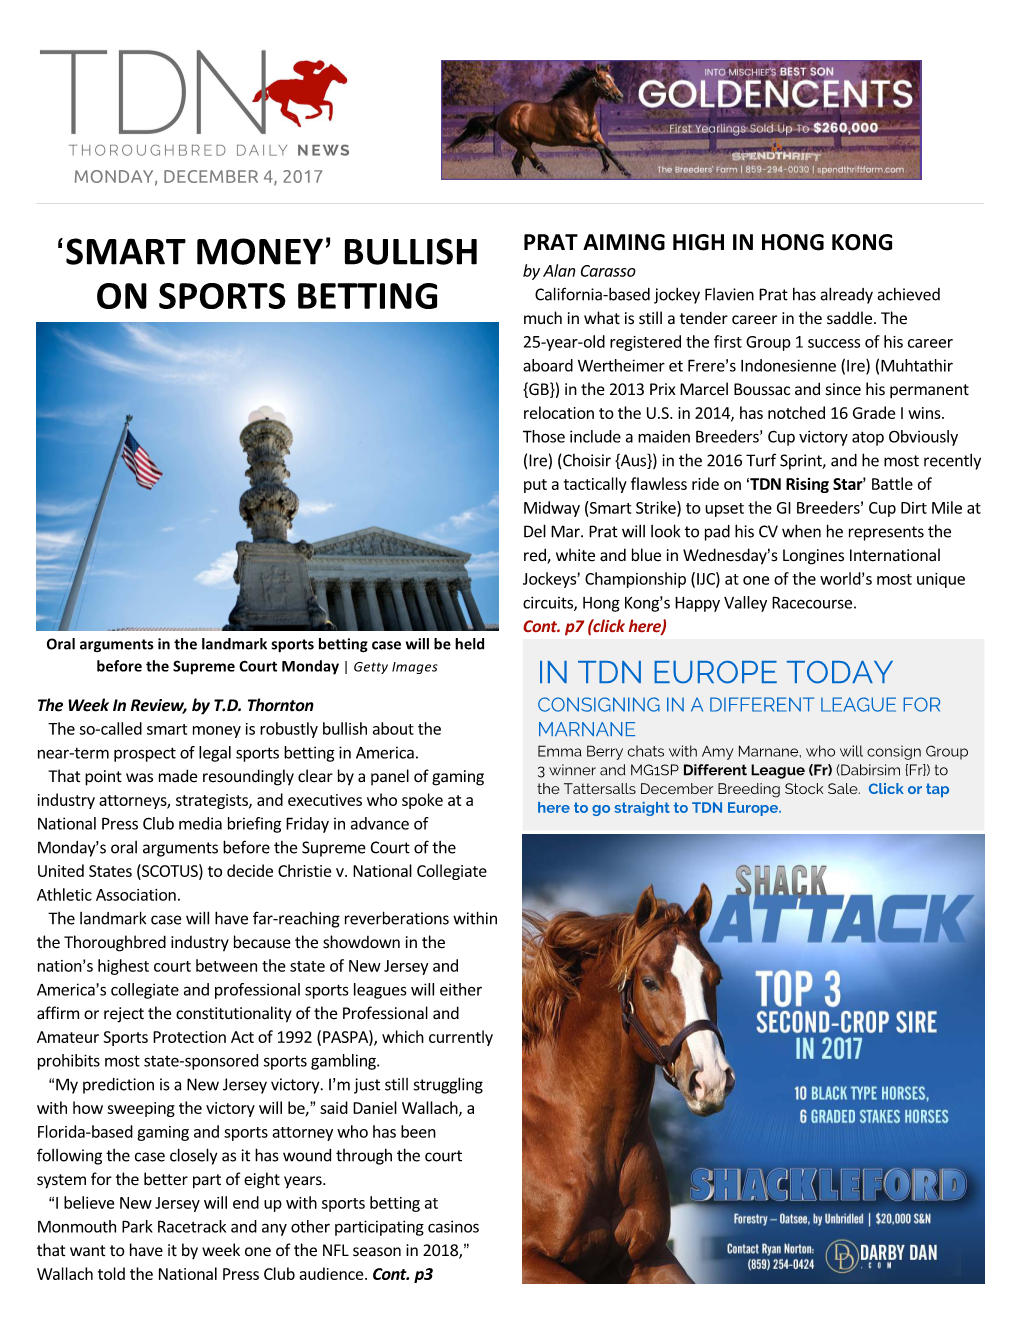 Smart Money= Bullish on Sports Betting